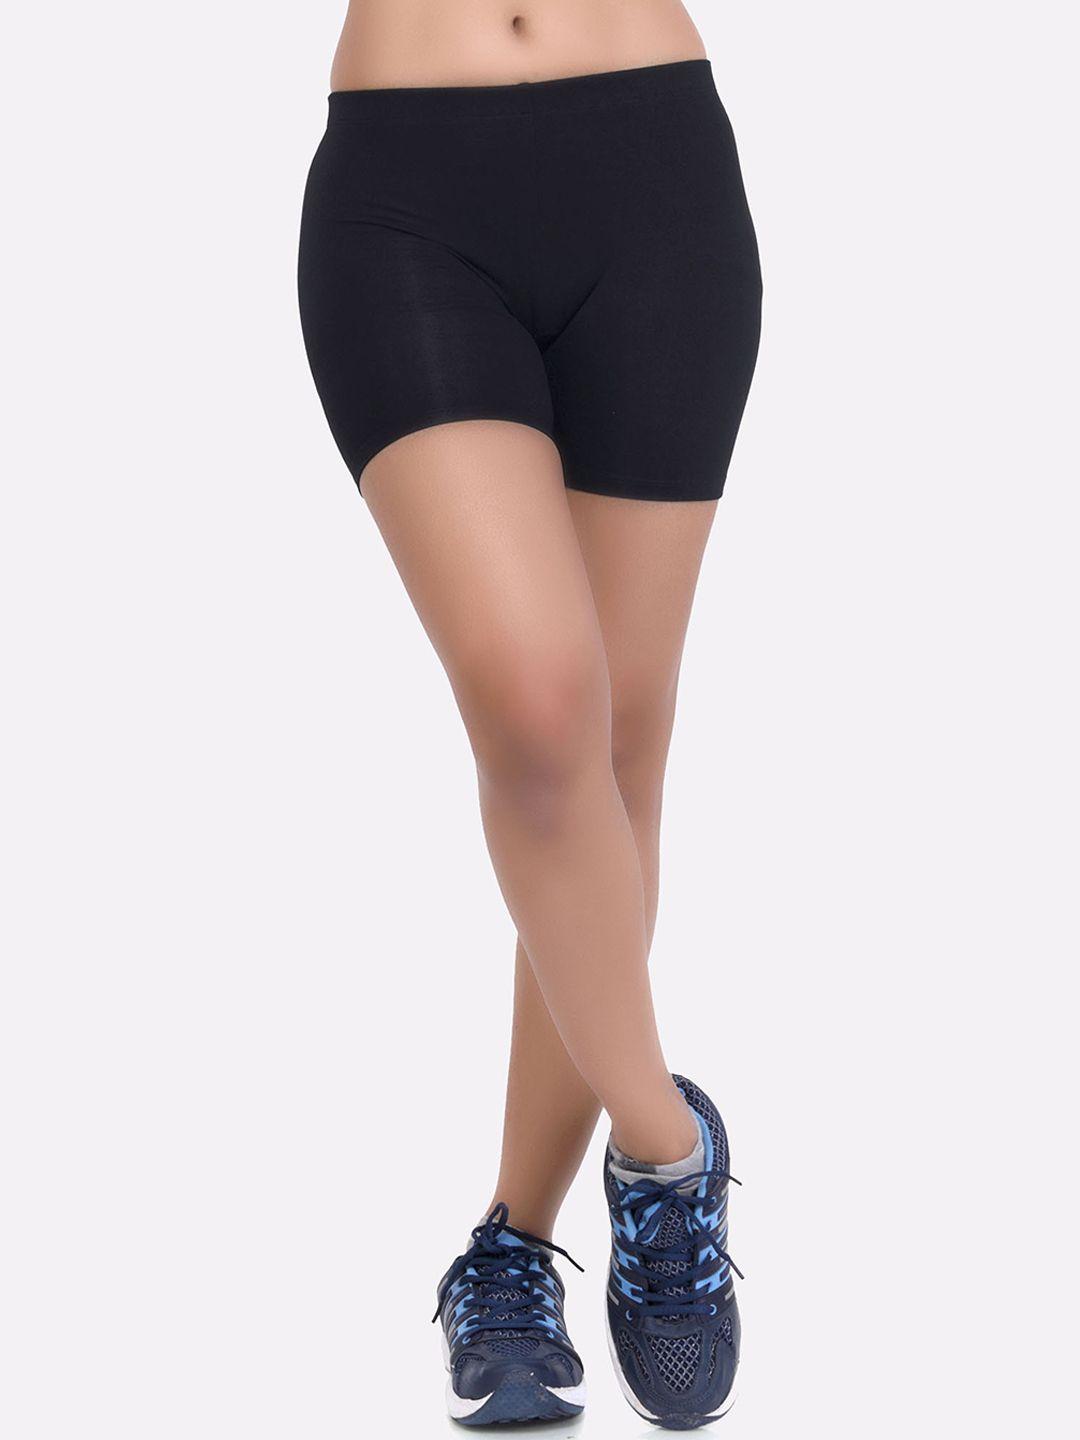 laasa sports women black skinny fit training or gym sports shorts